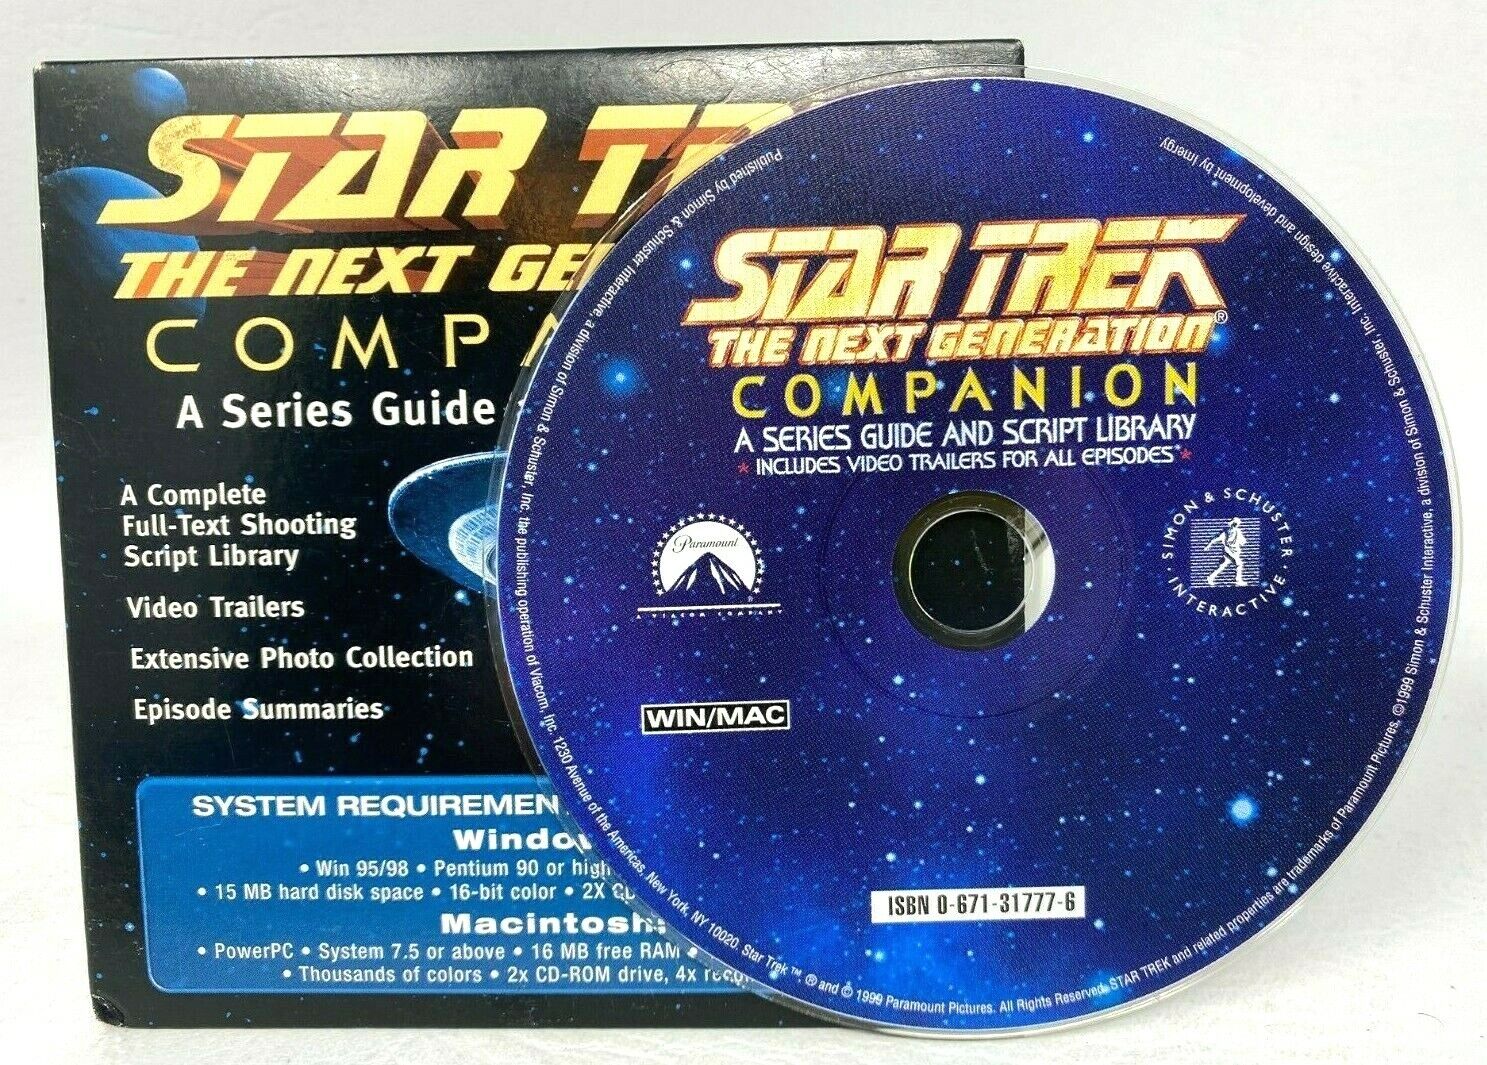 Star Trek The Next Generation Companion 1999 CD-ROM Series Guide Script Library